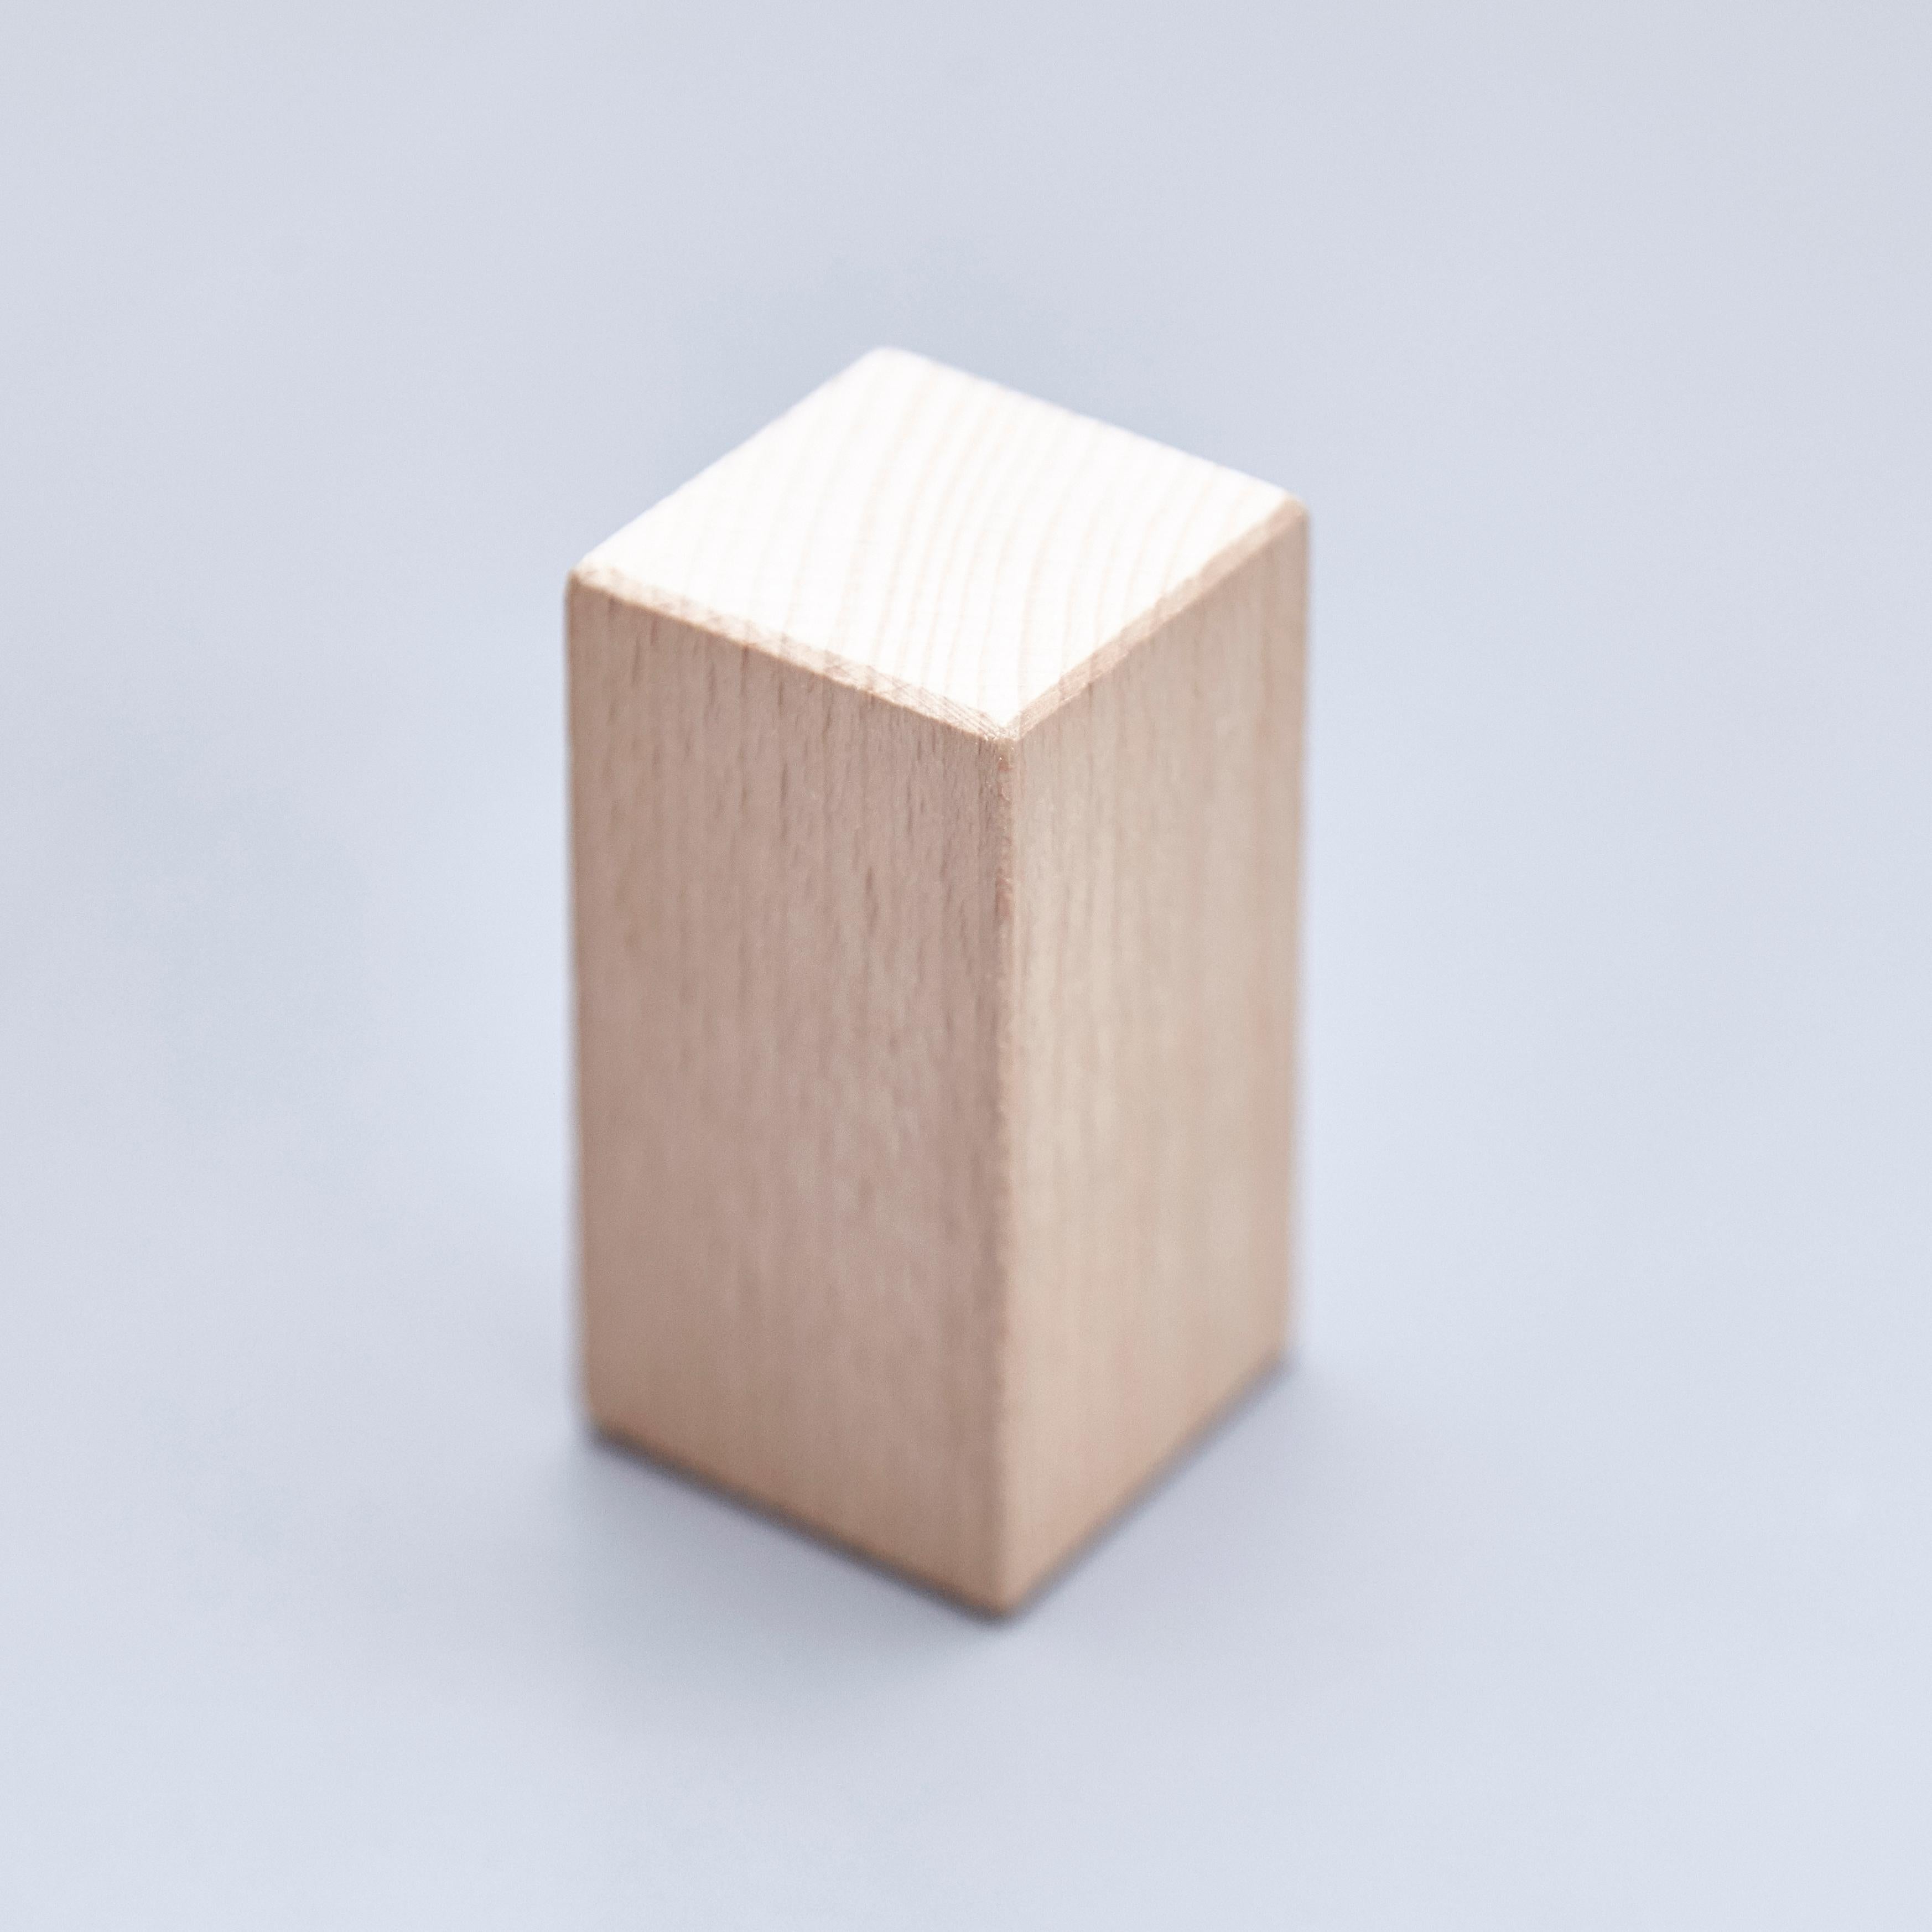 Ko Verzuu for Ado, Mid Century Modern, Wood Blocks Construction Netherlands Toy  2